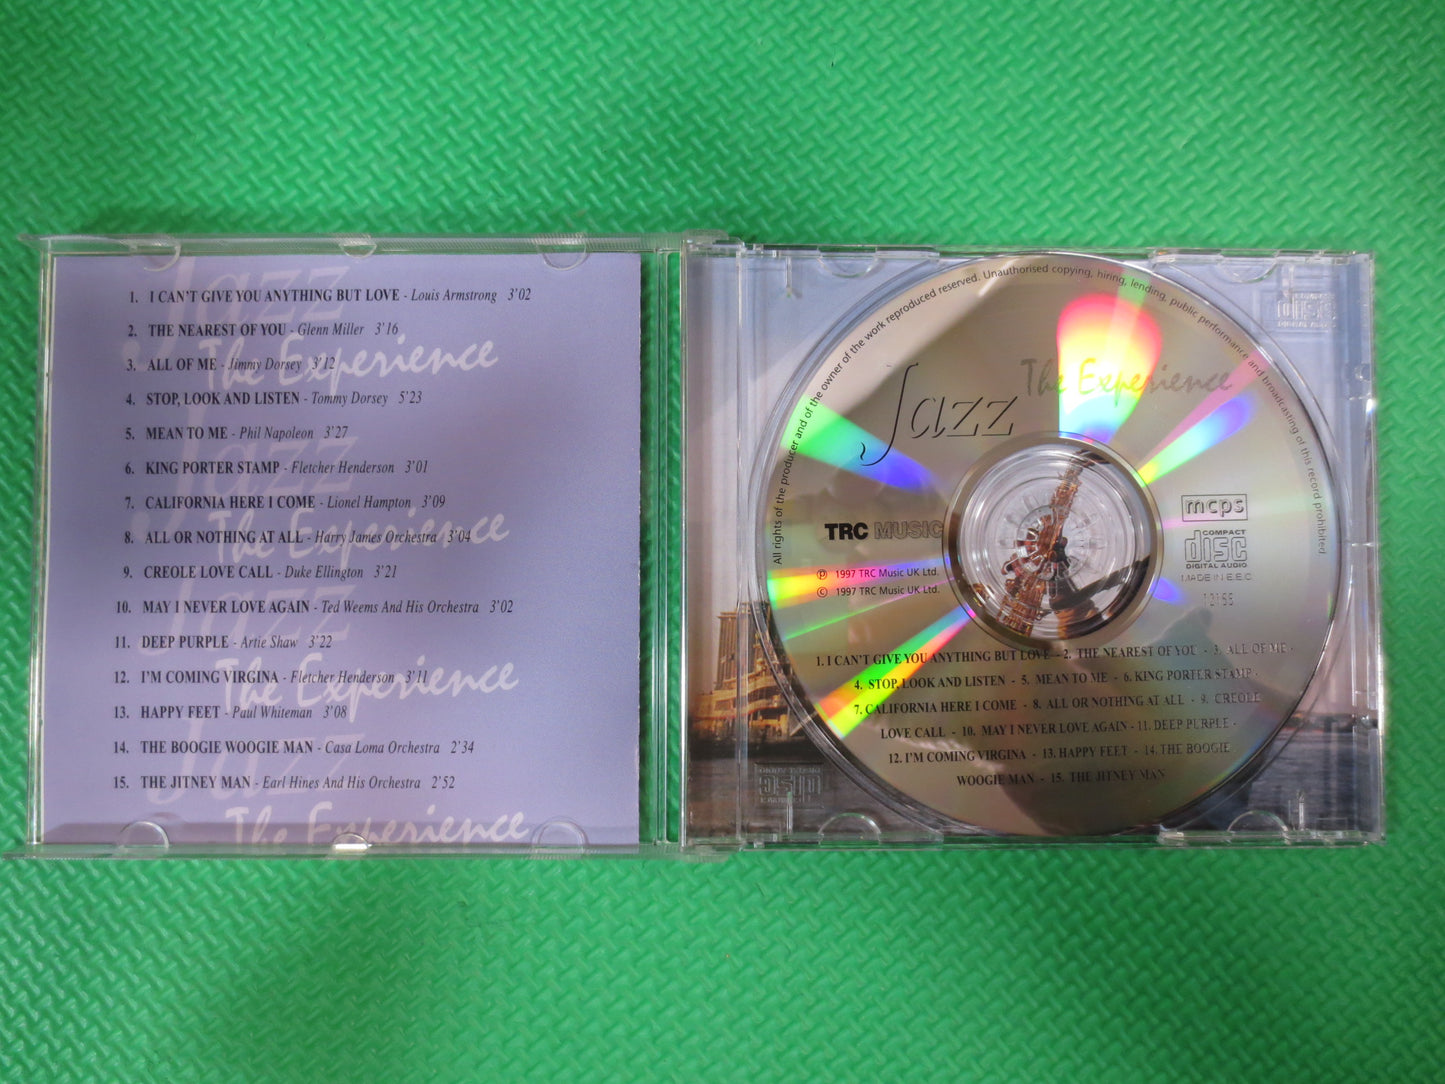 JAZZ, The EXPERIENCE, JAZZ Cd, Jazz Compact Disc, Jazz Album, Cd Jazz, Classic Jazz Cd, Music Cd, 1997 Compact Discs